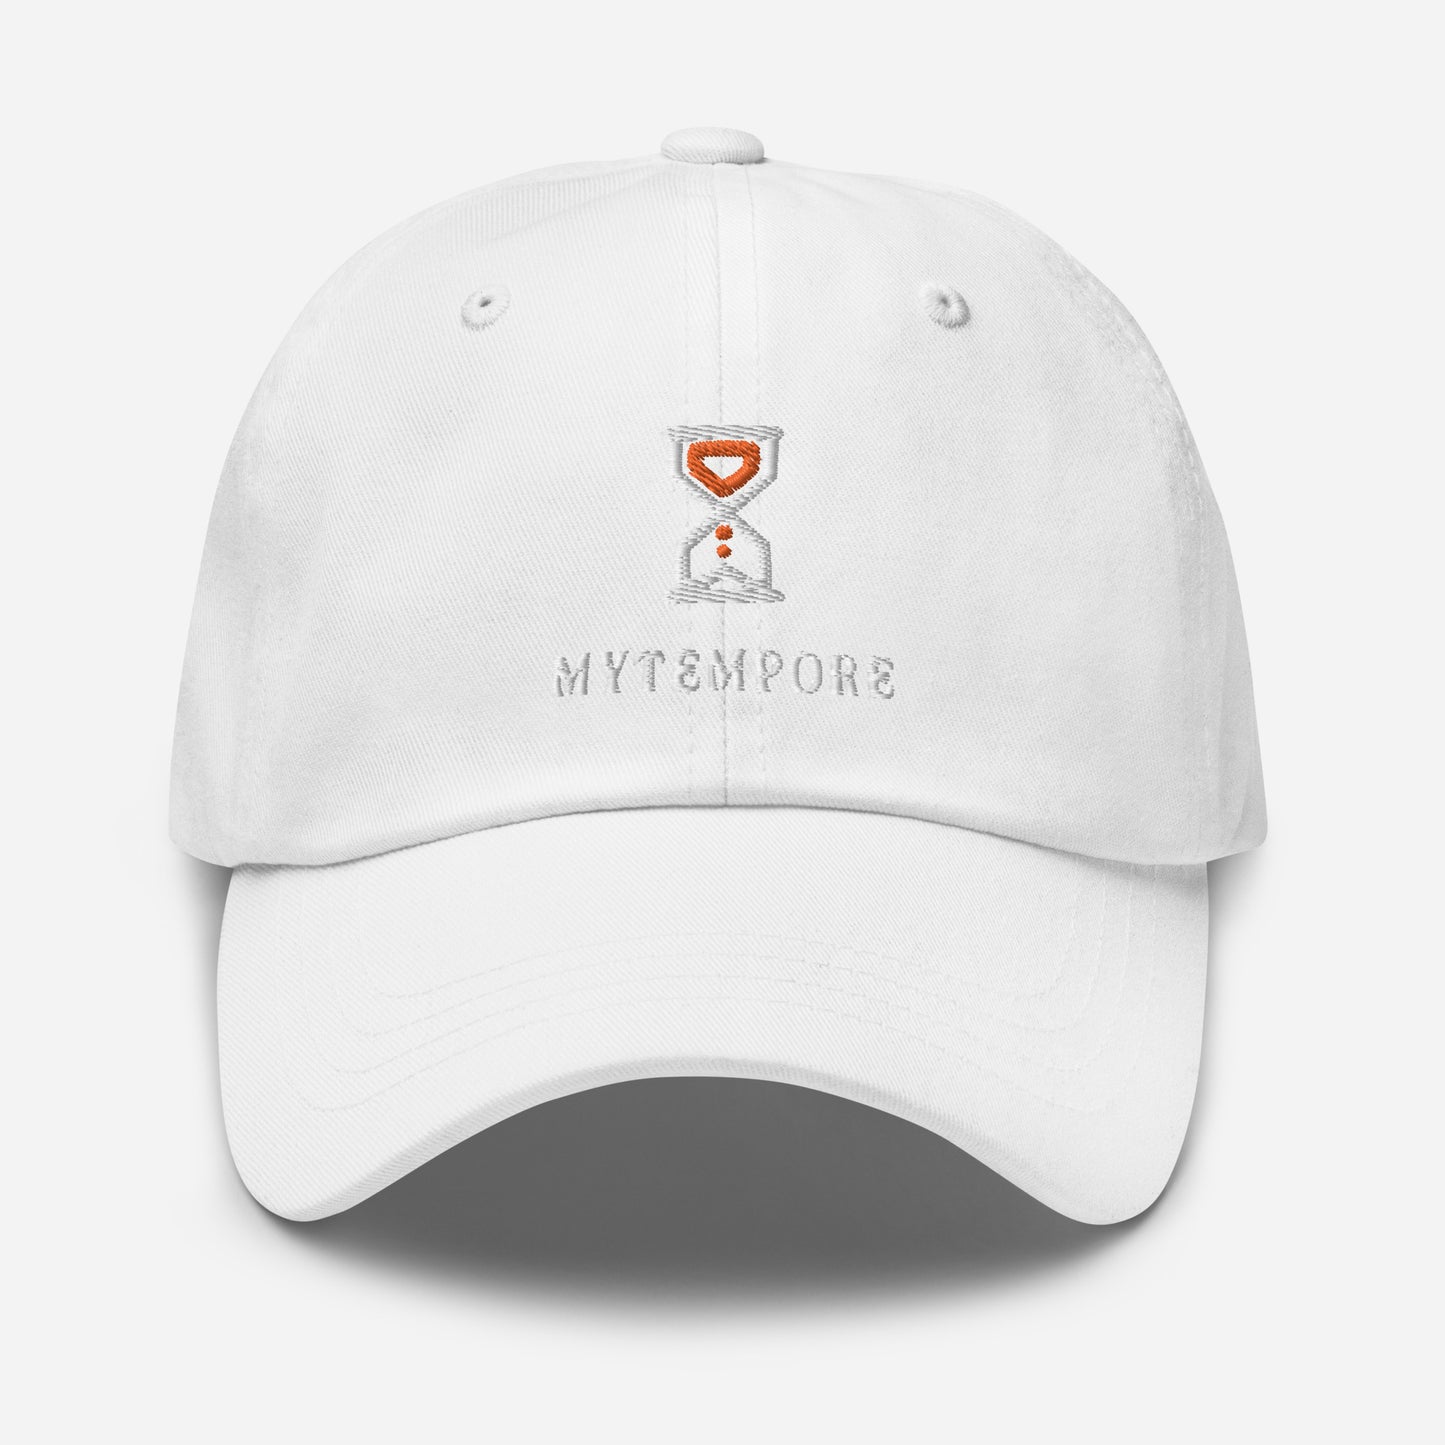 MYTEMPORE Dad hat